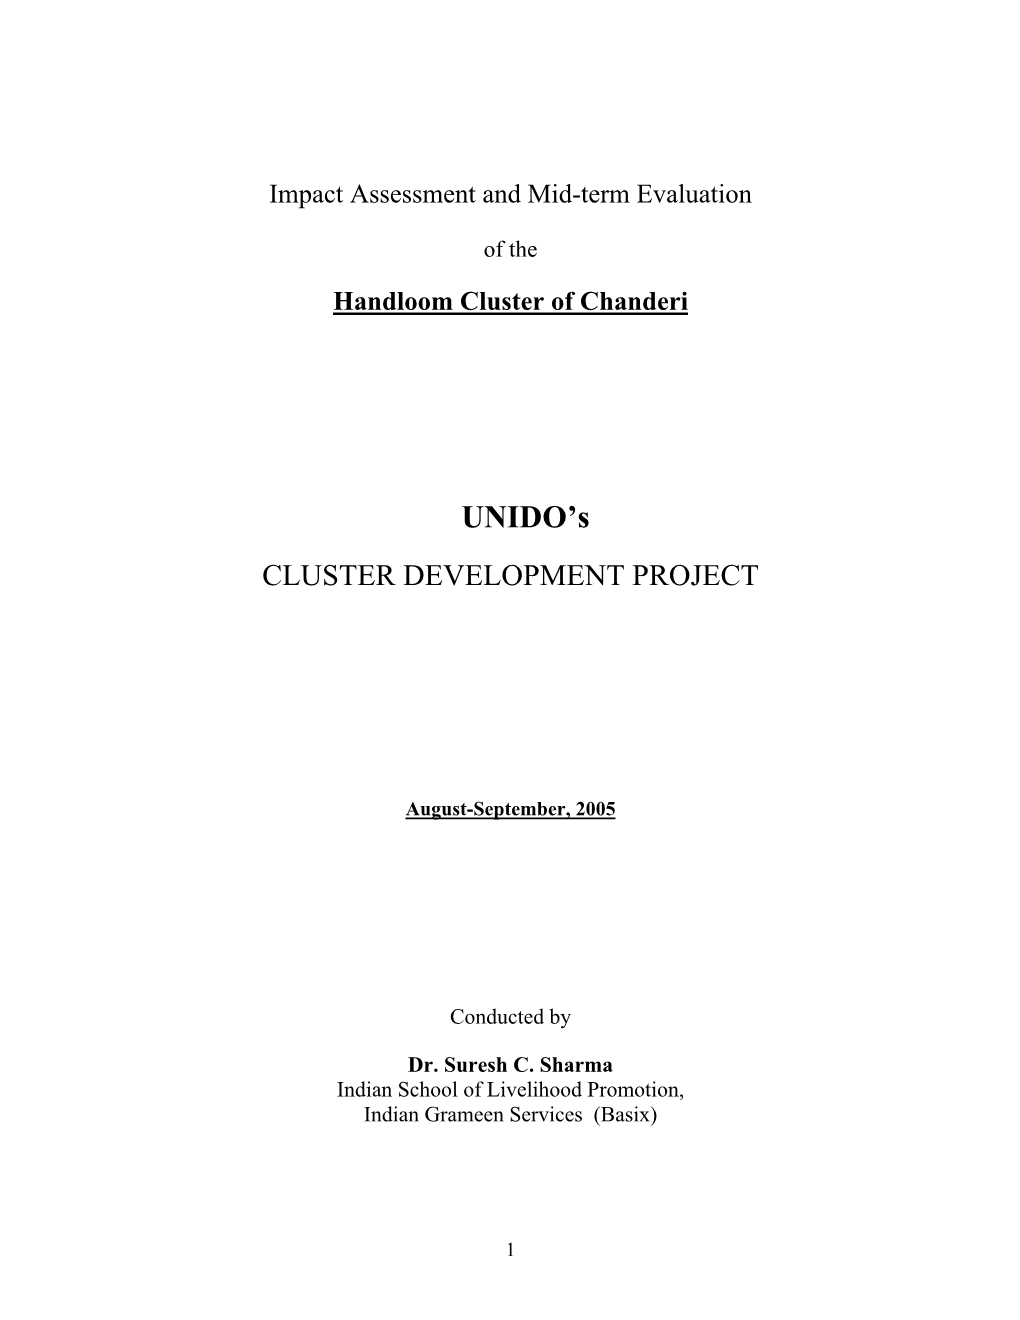 Handloom Cluster of Chanderi UNIDO's